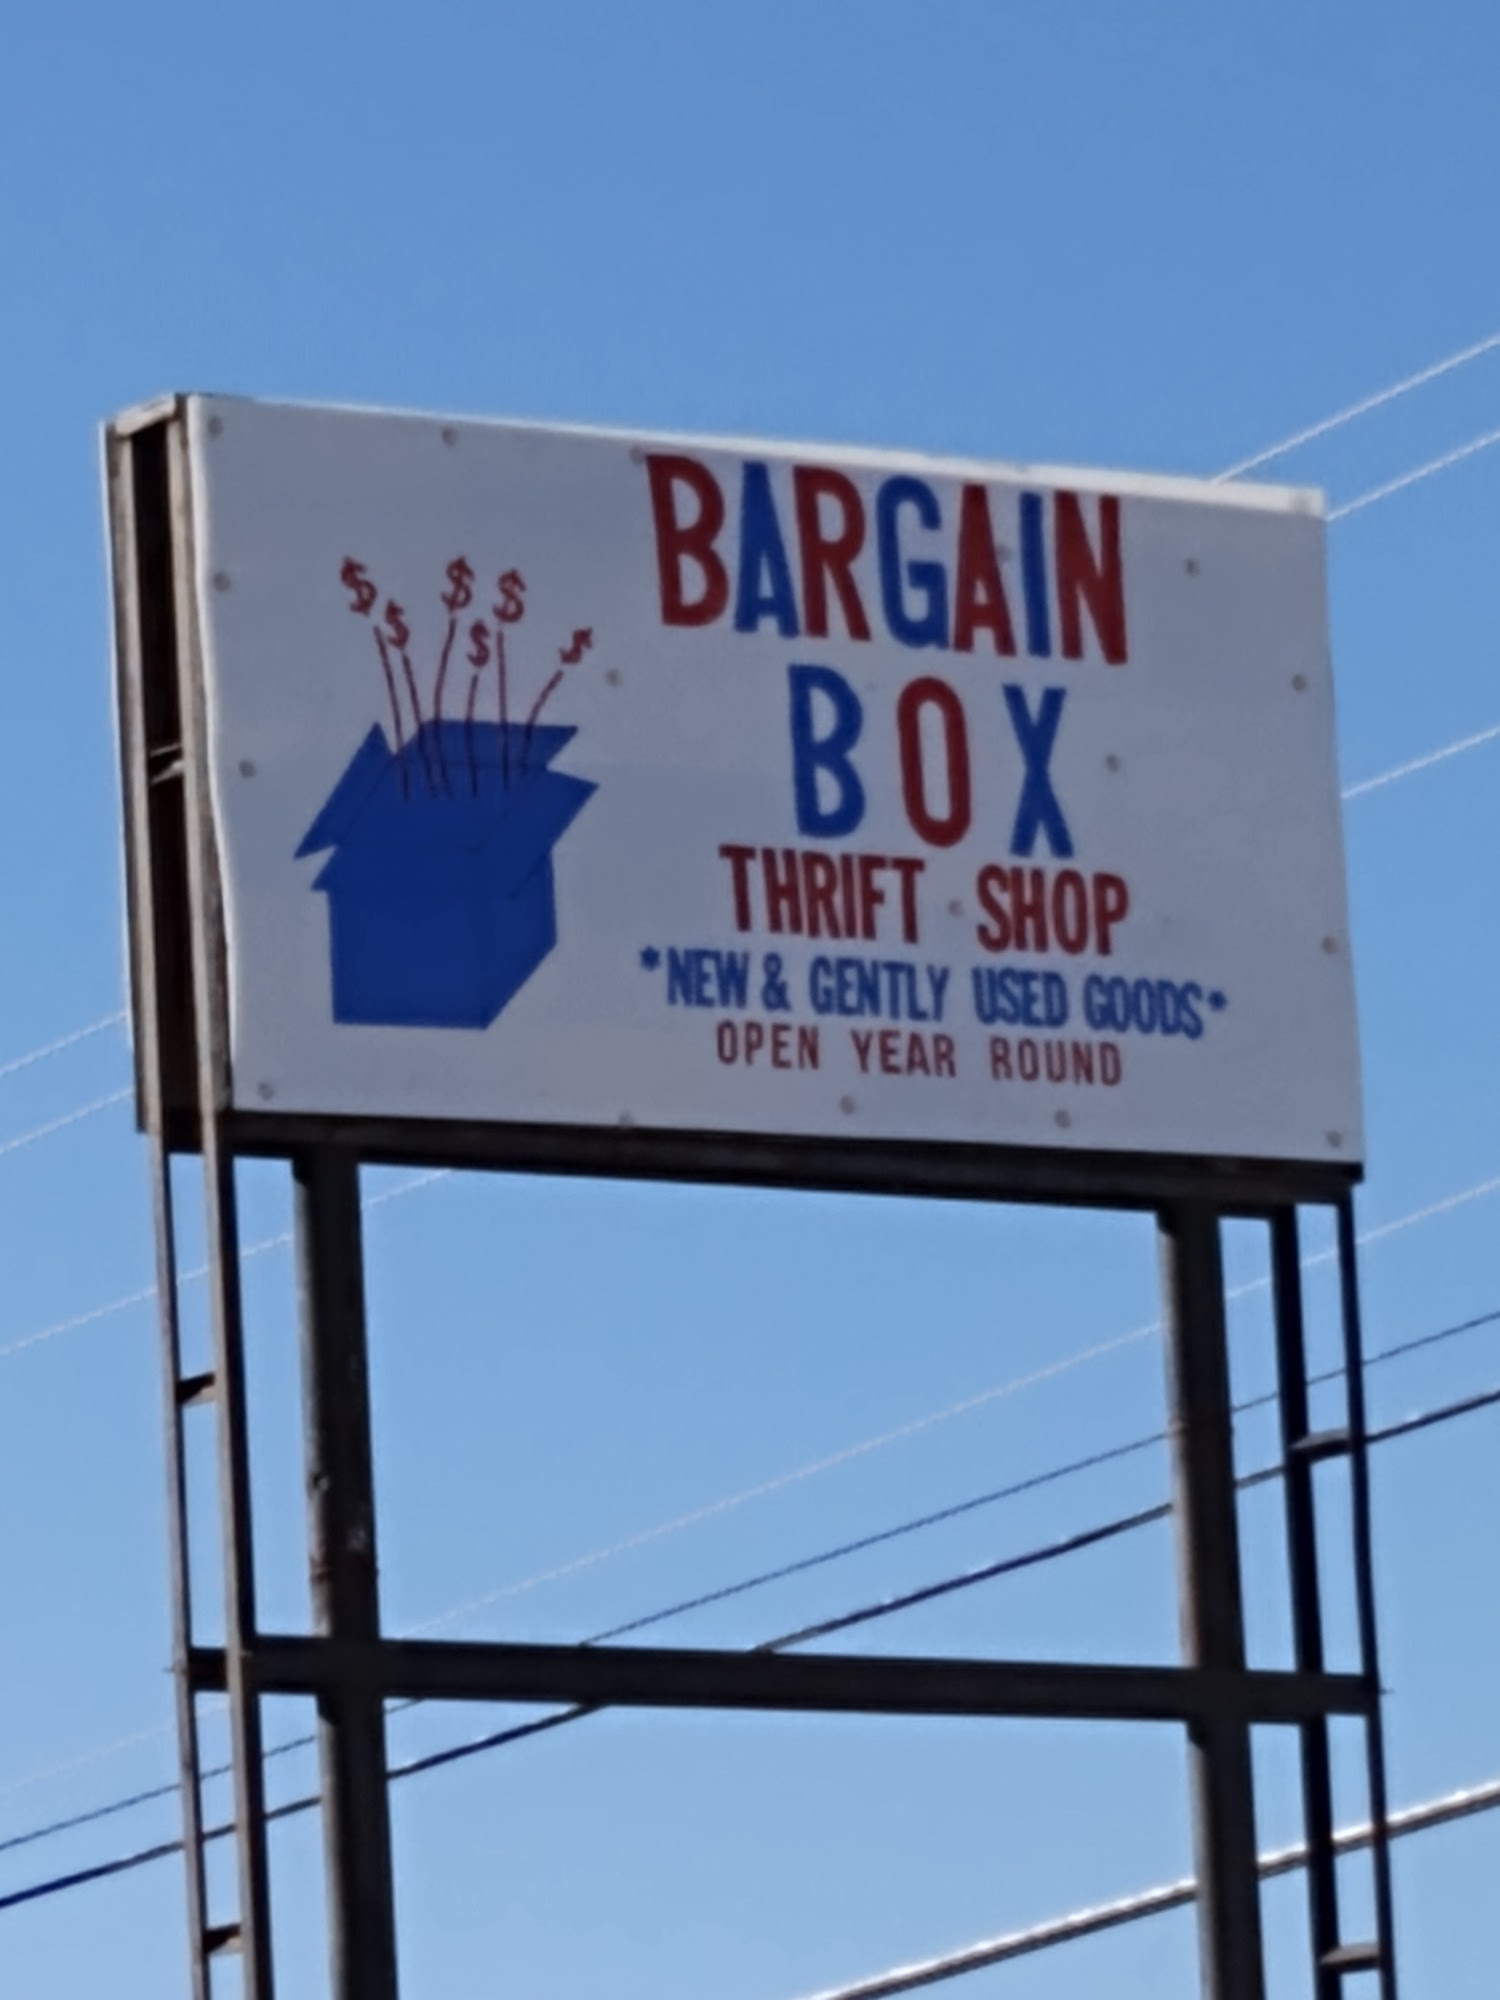 Bargain Box Thrift Shop